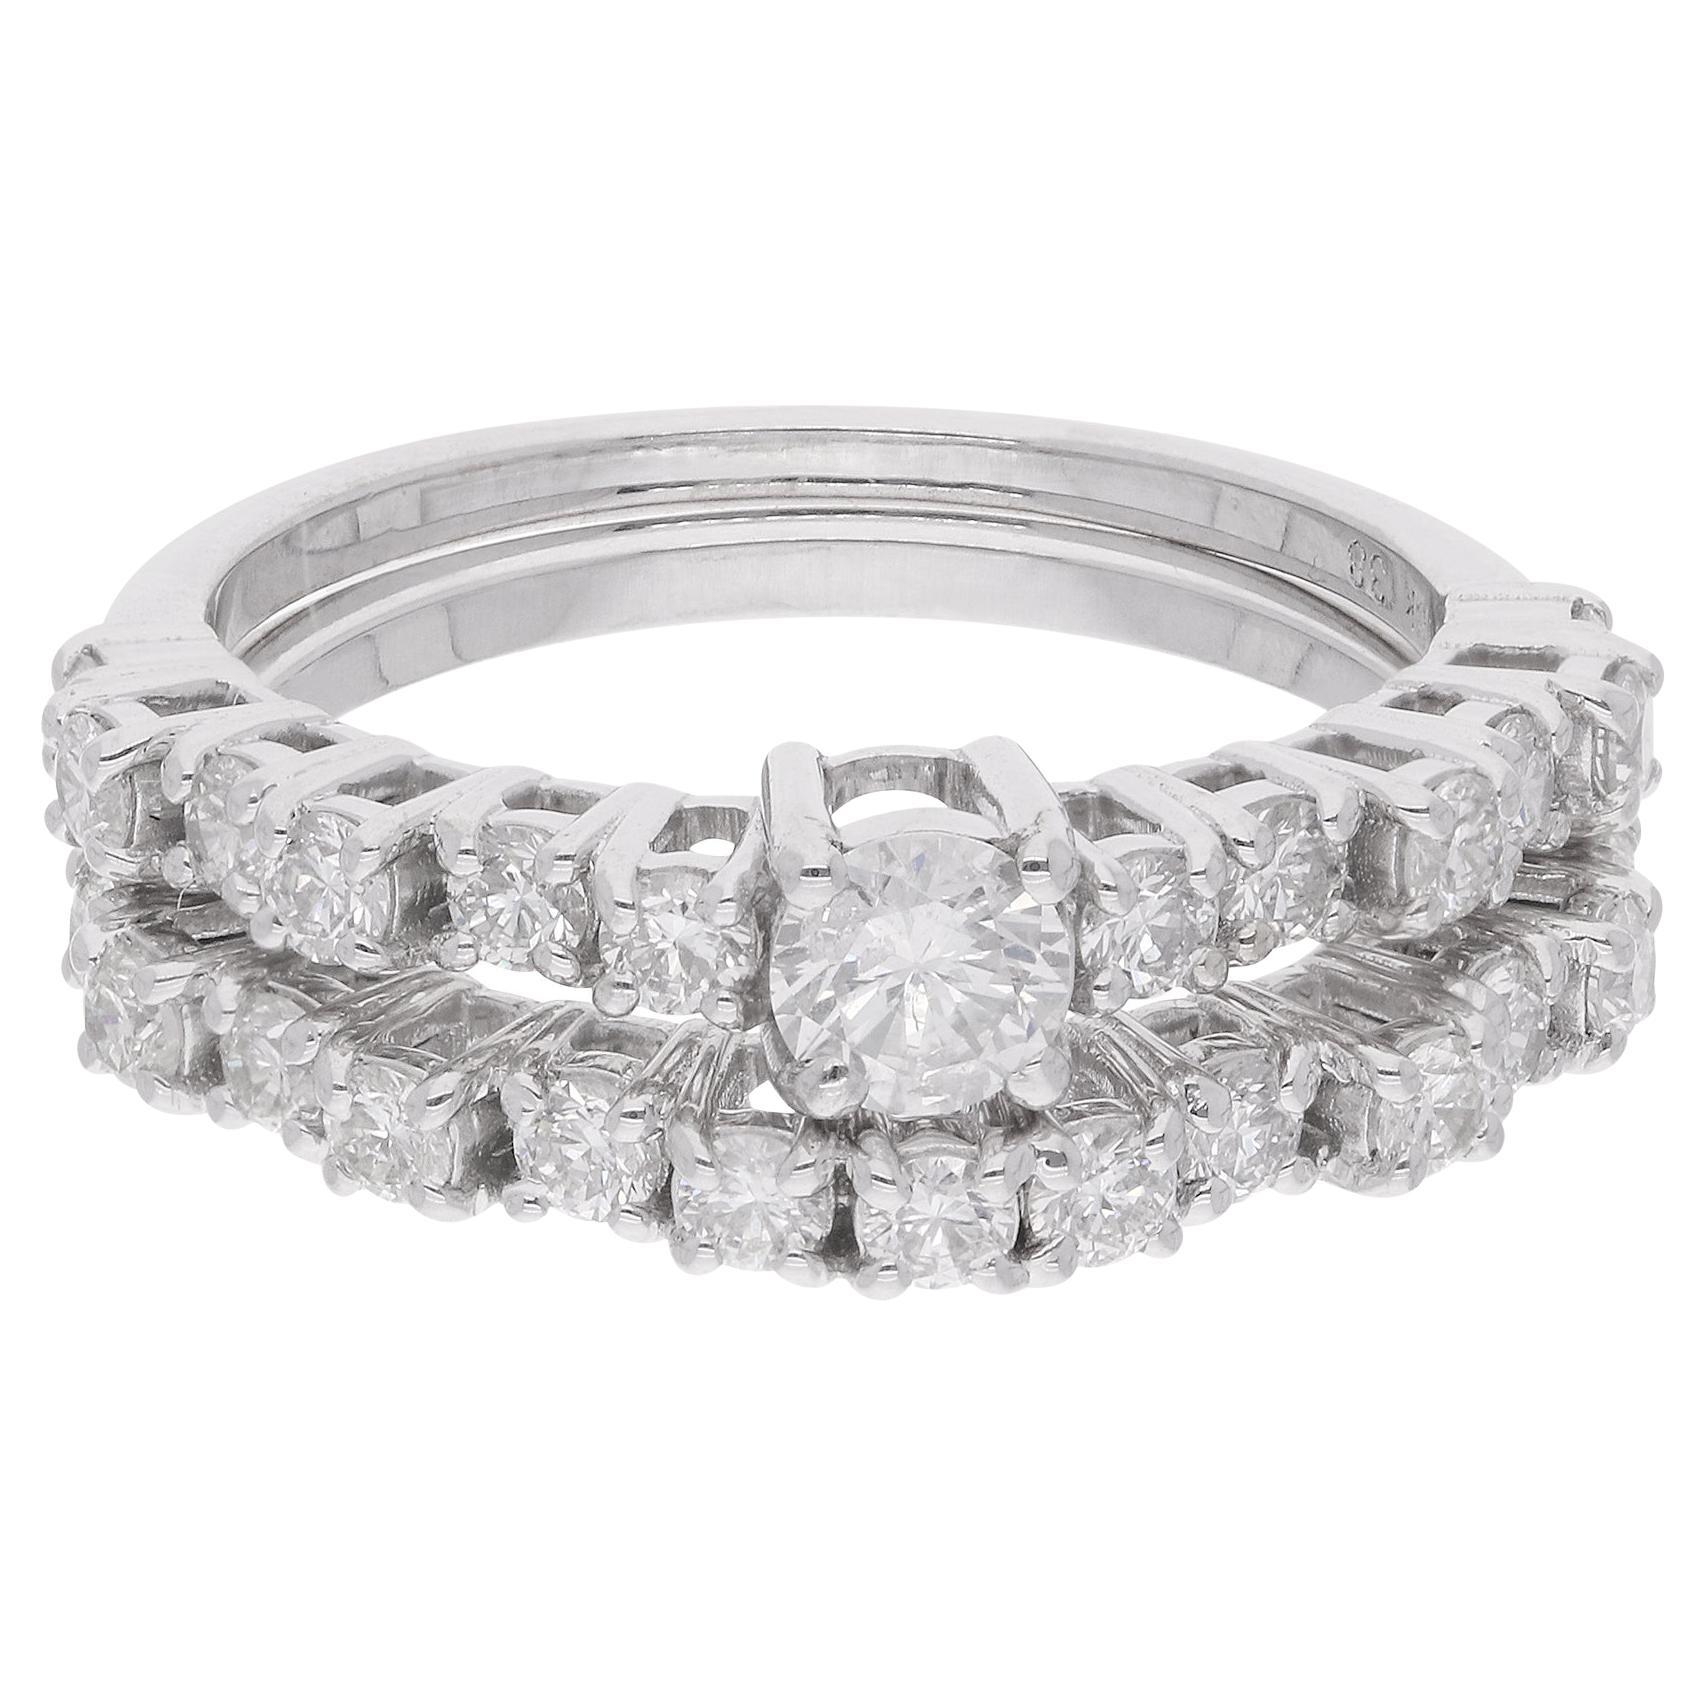 1.15 Carat Diamond Stackable Ring Set 18 Karat White Gold Handmade Fine Jewelry